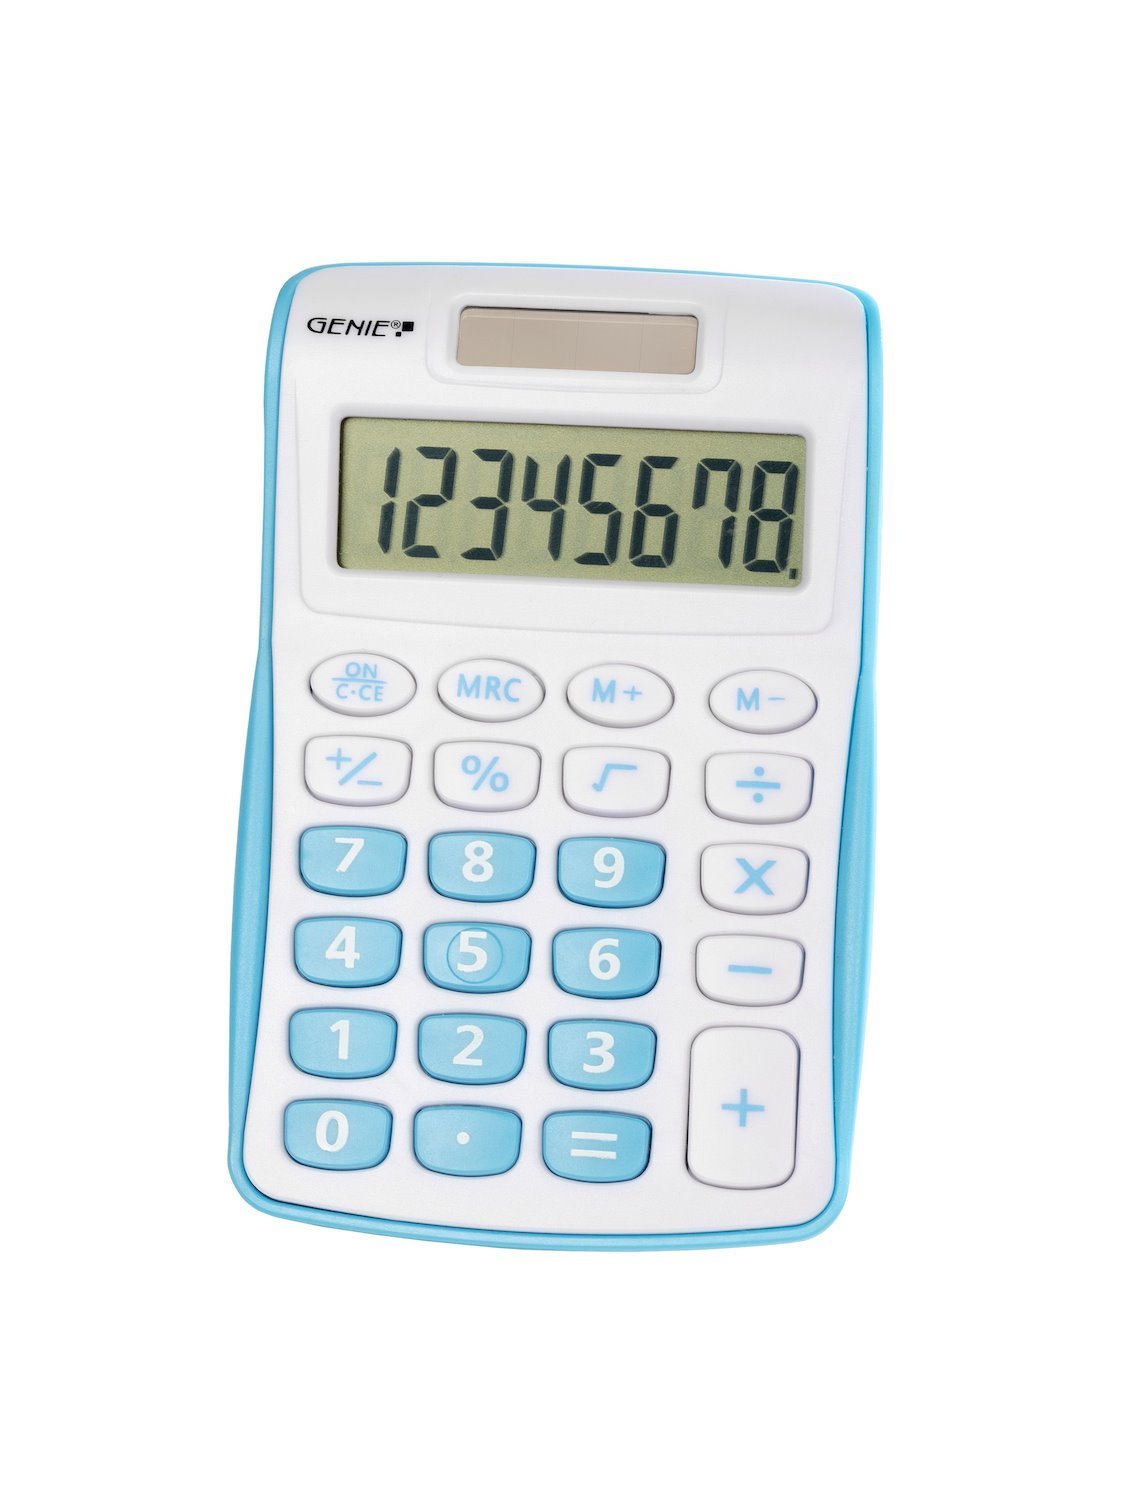 Genius Genie 120 B Calculator Pocket Display Blue White (Genie 120B 8 Digit Pocket Calculator Blue - 12492)